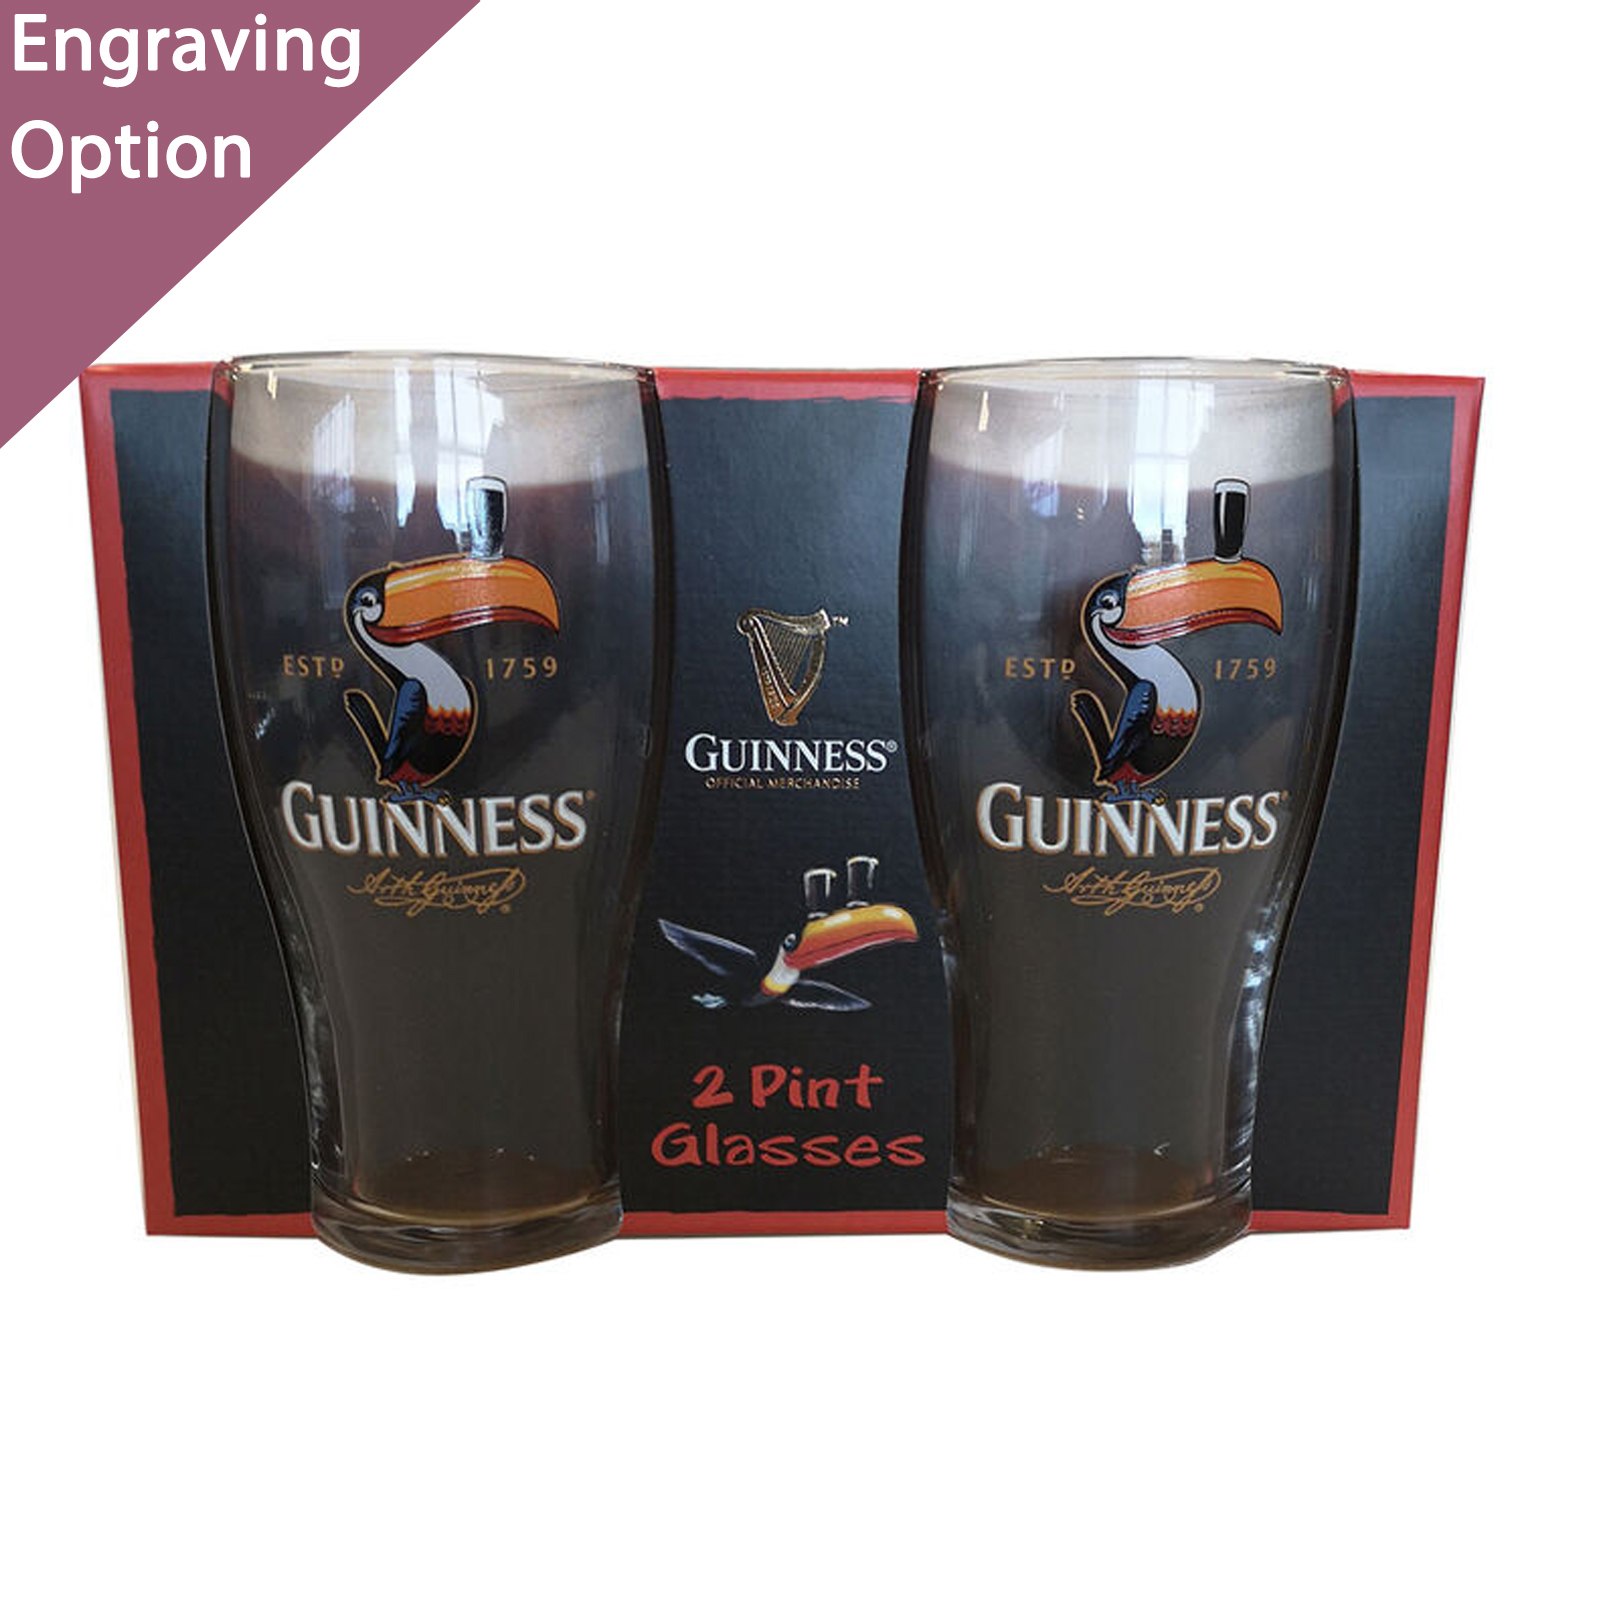 Guinness Toucan Christmas Pint Glass